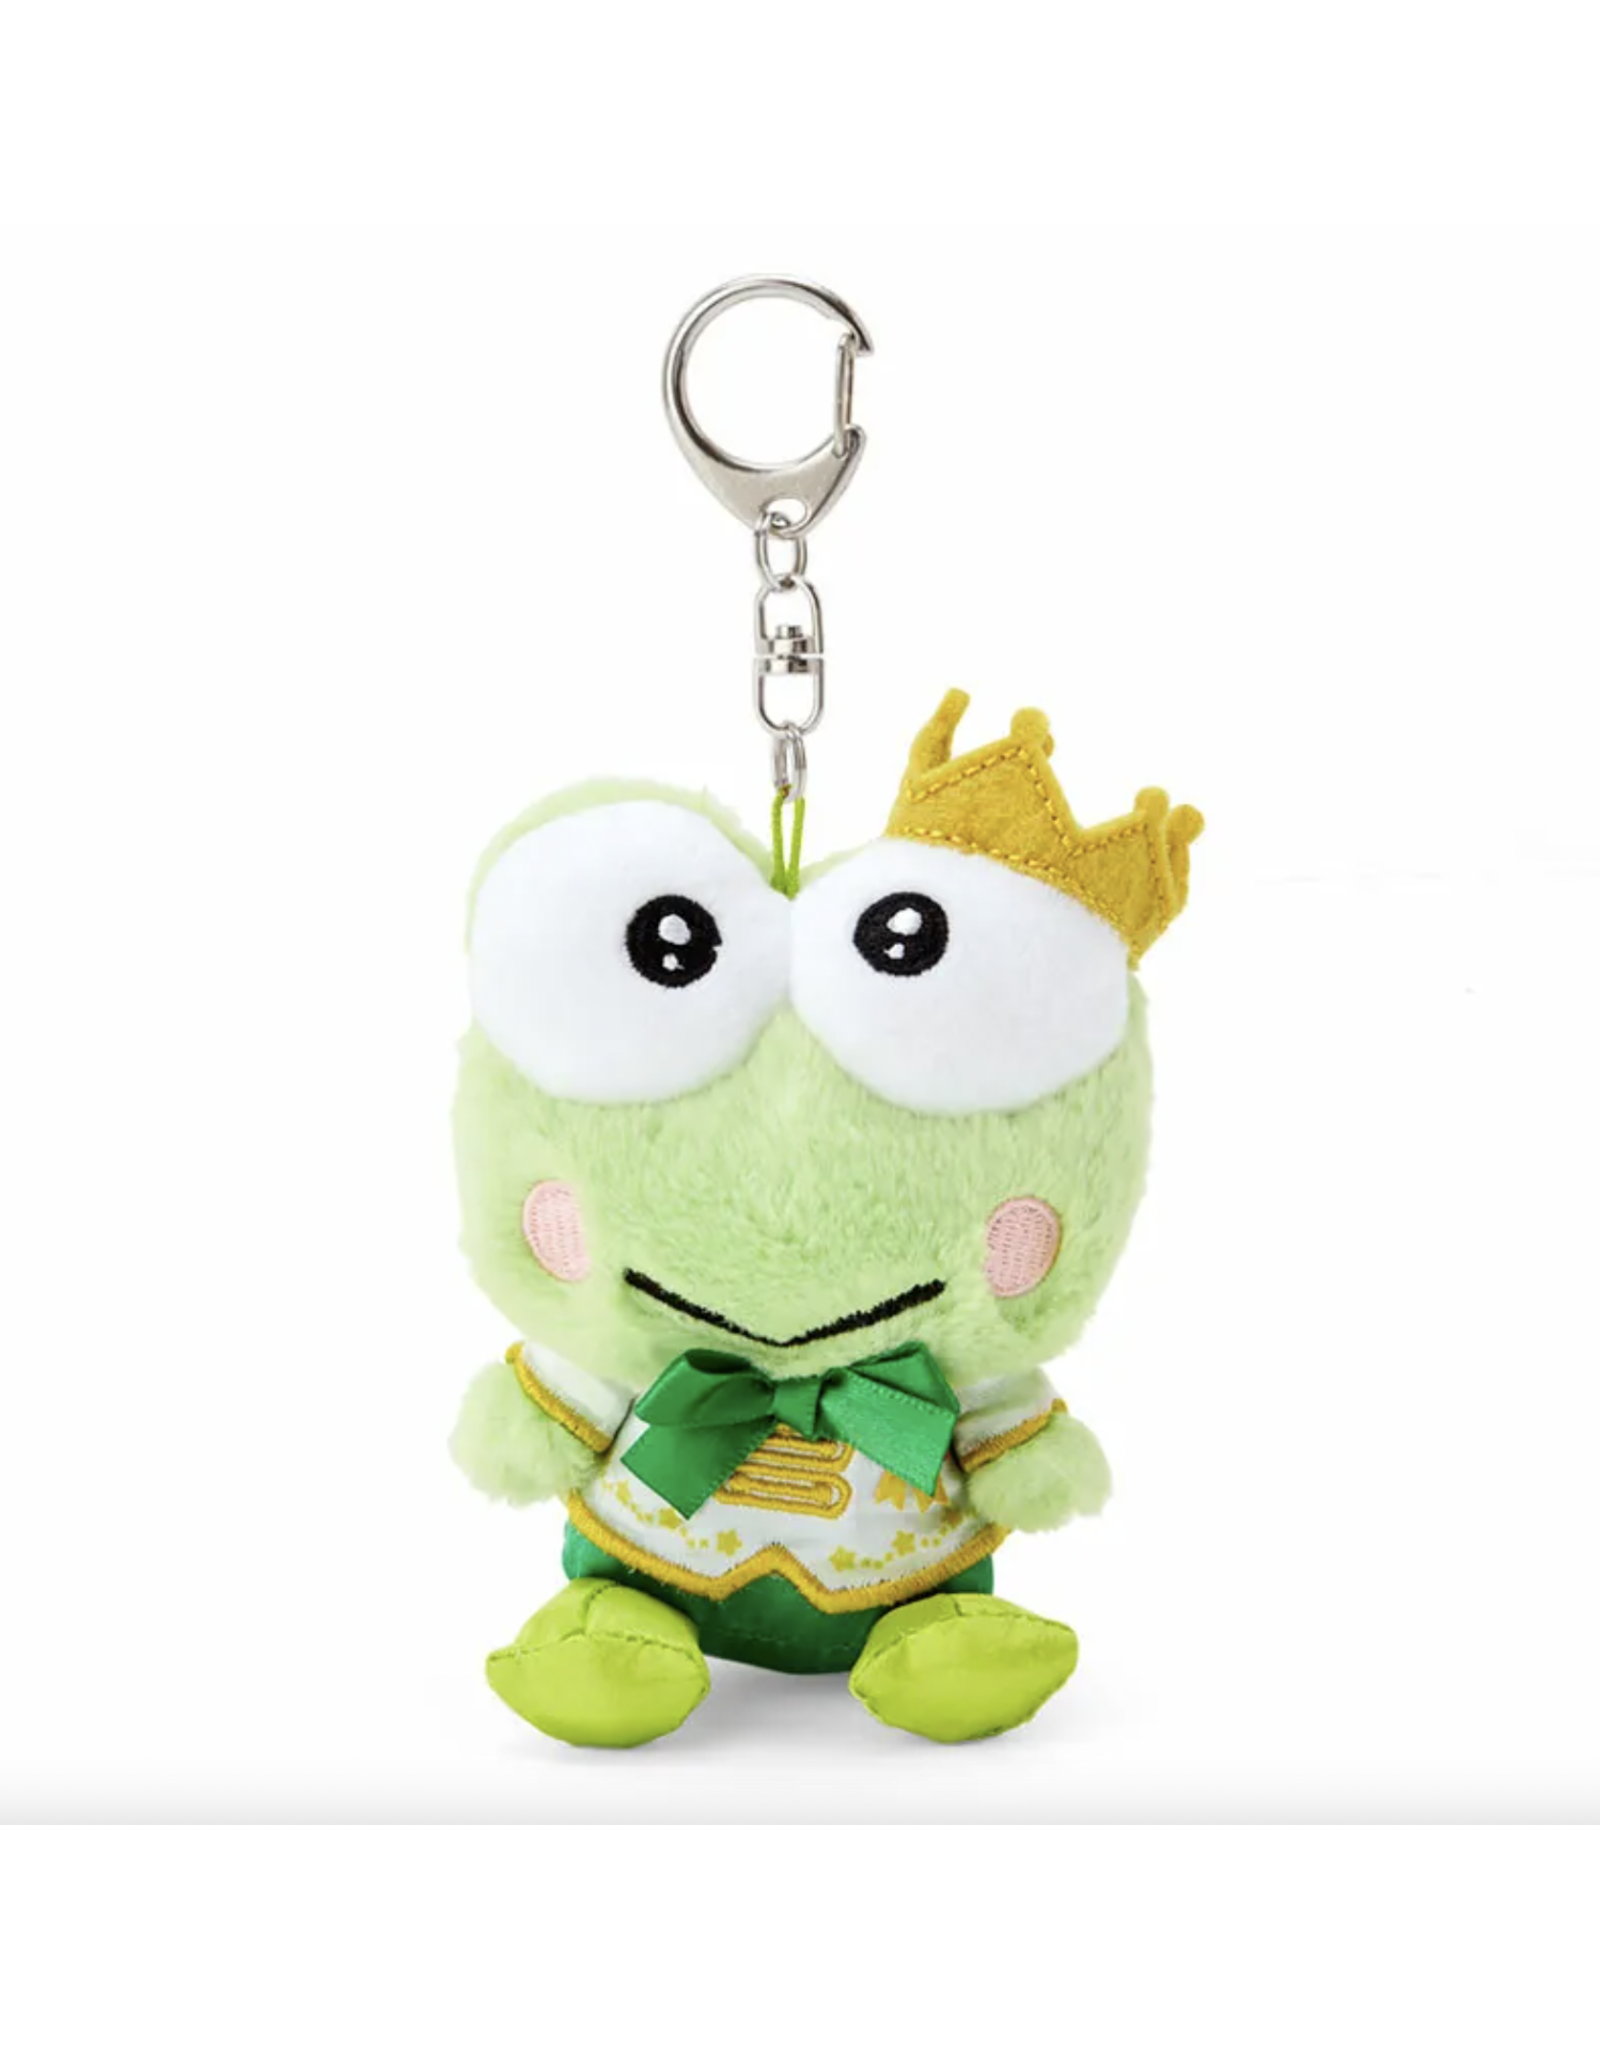 Sanrio Keychain Mascot: Kerokerokeroppi